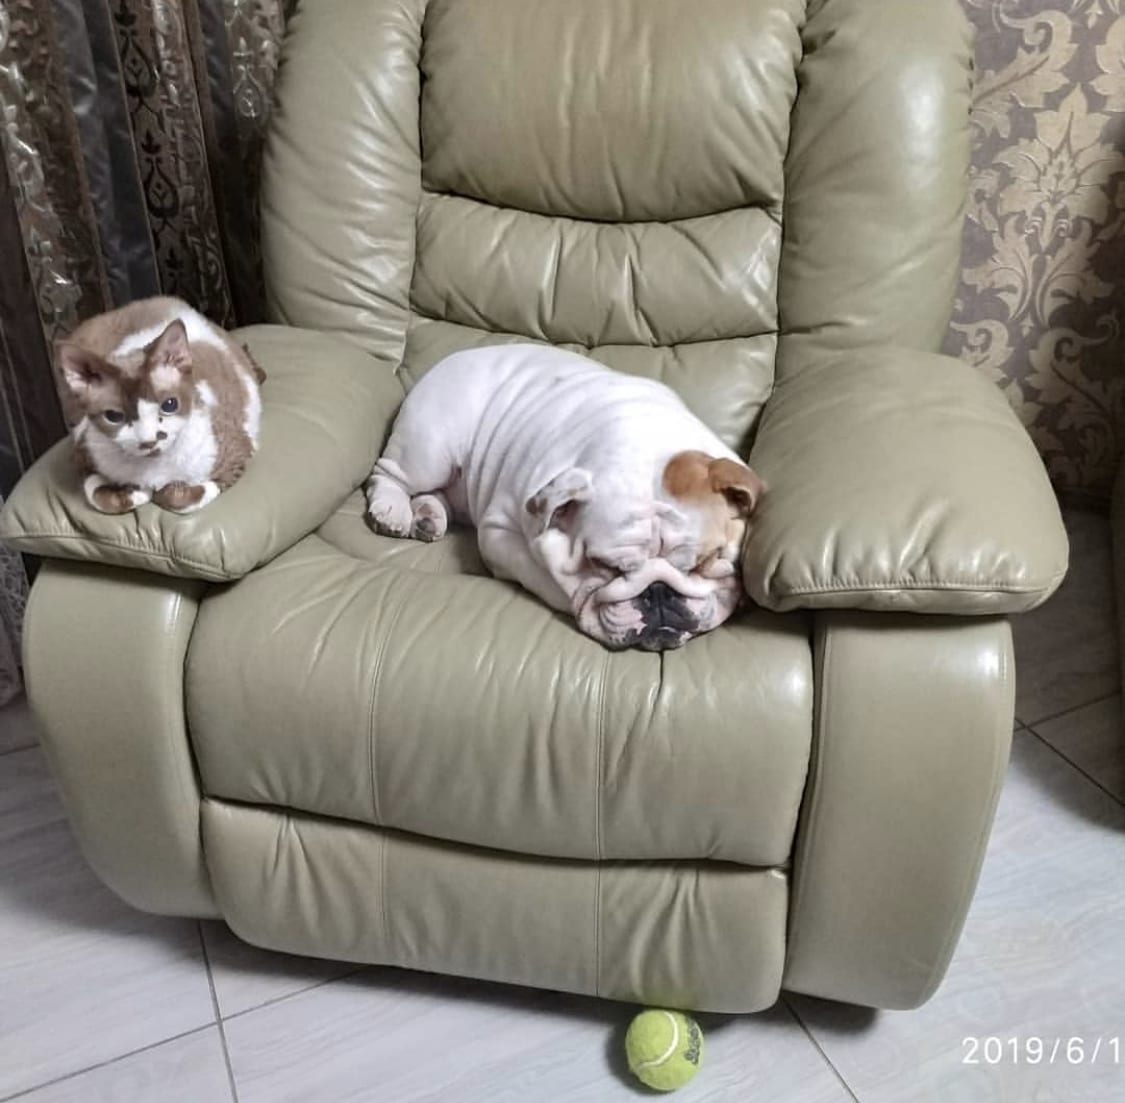 A English Bulldog lying sleeping on the chair with a cat lying on top of the arms of the chair